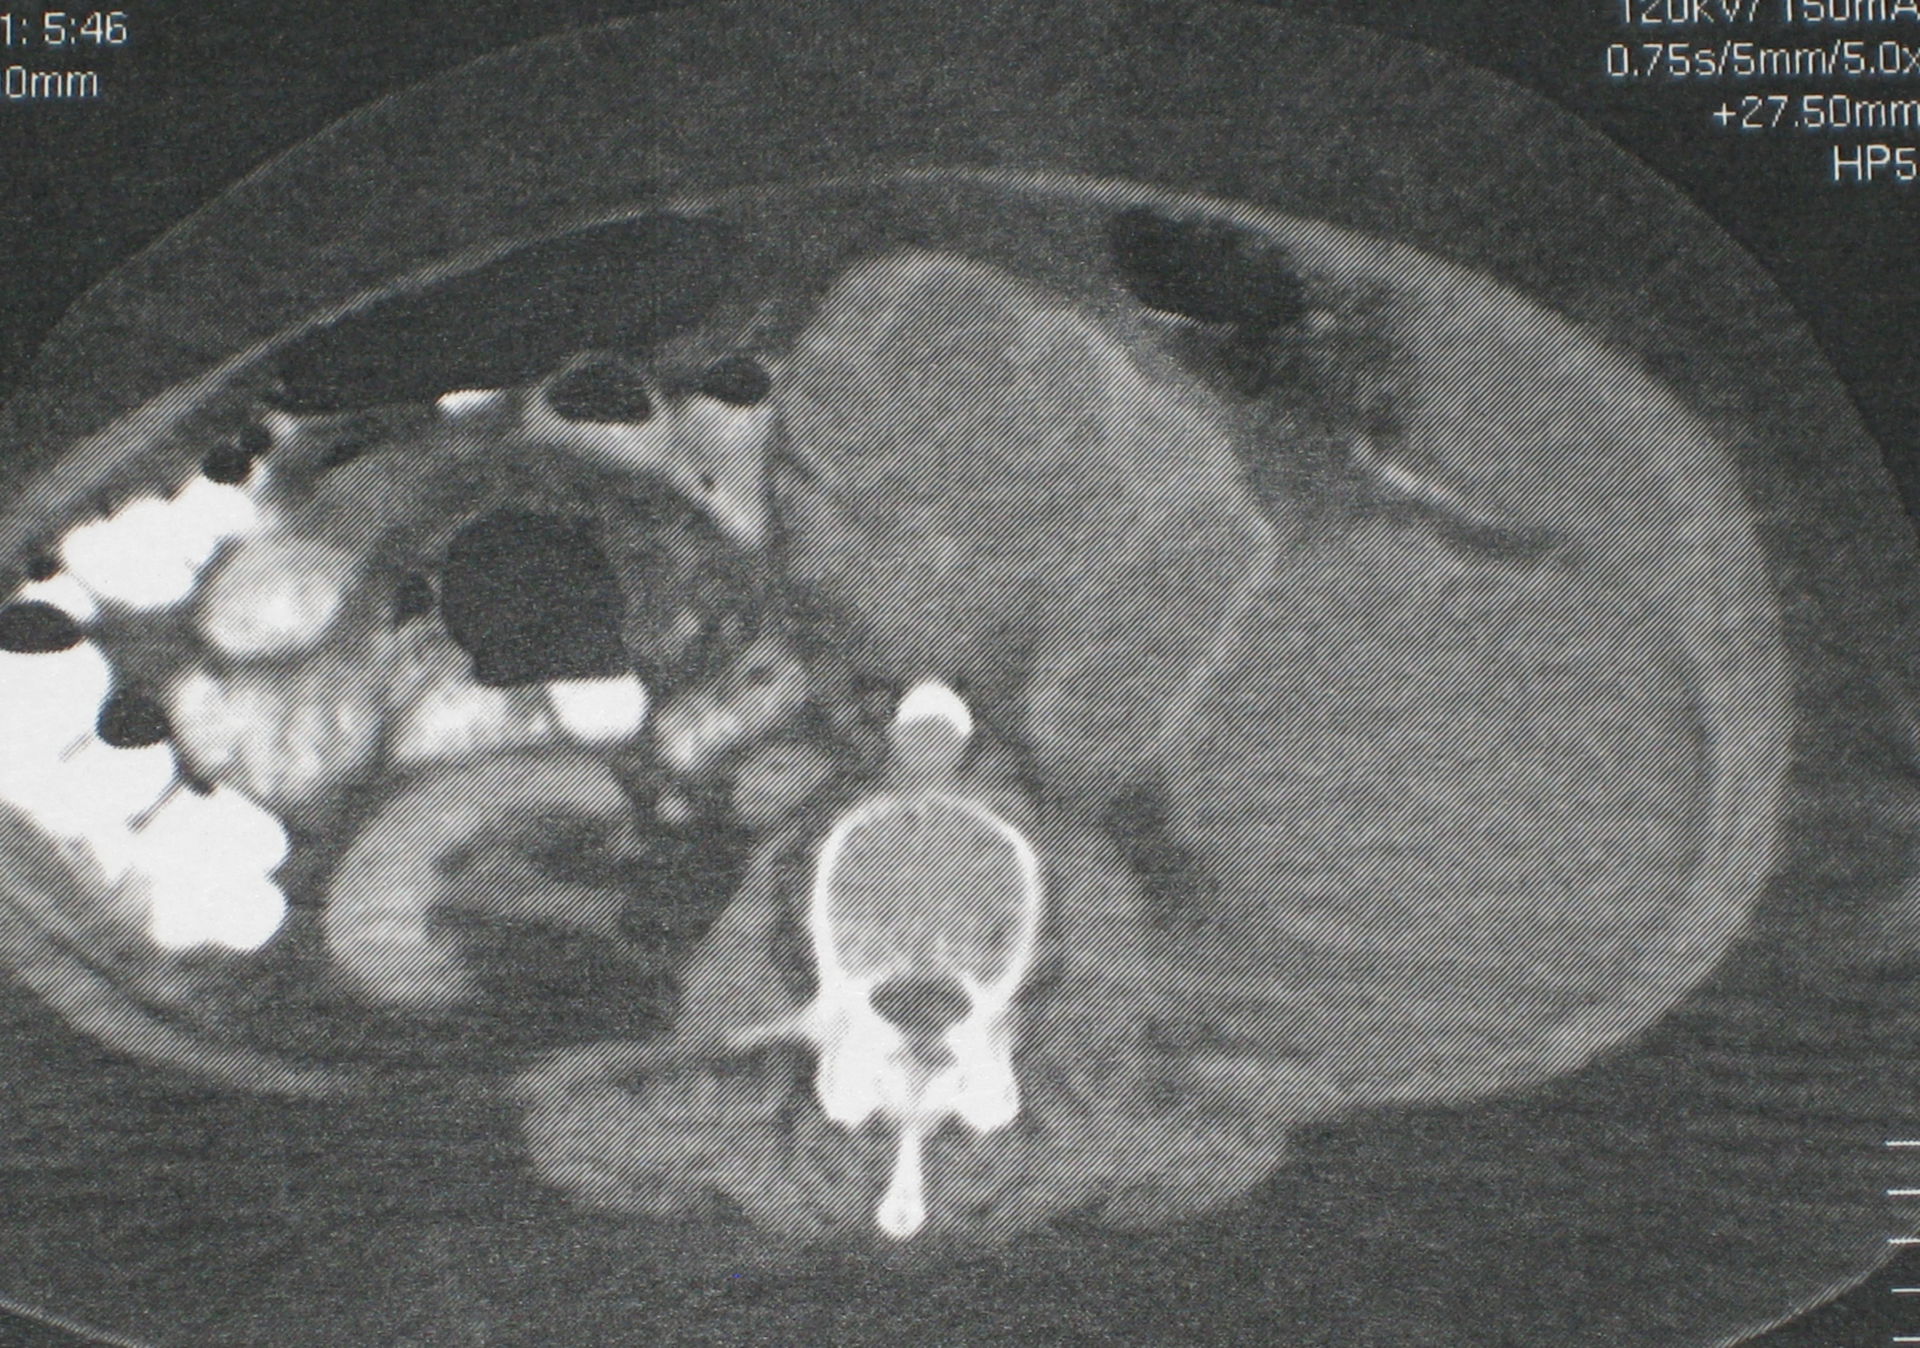 Pyonephrosis left kidney - CT scan